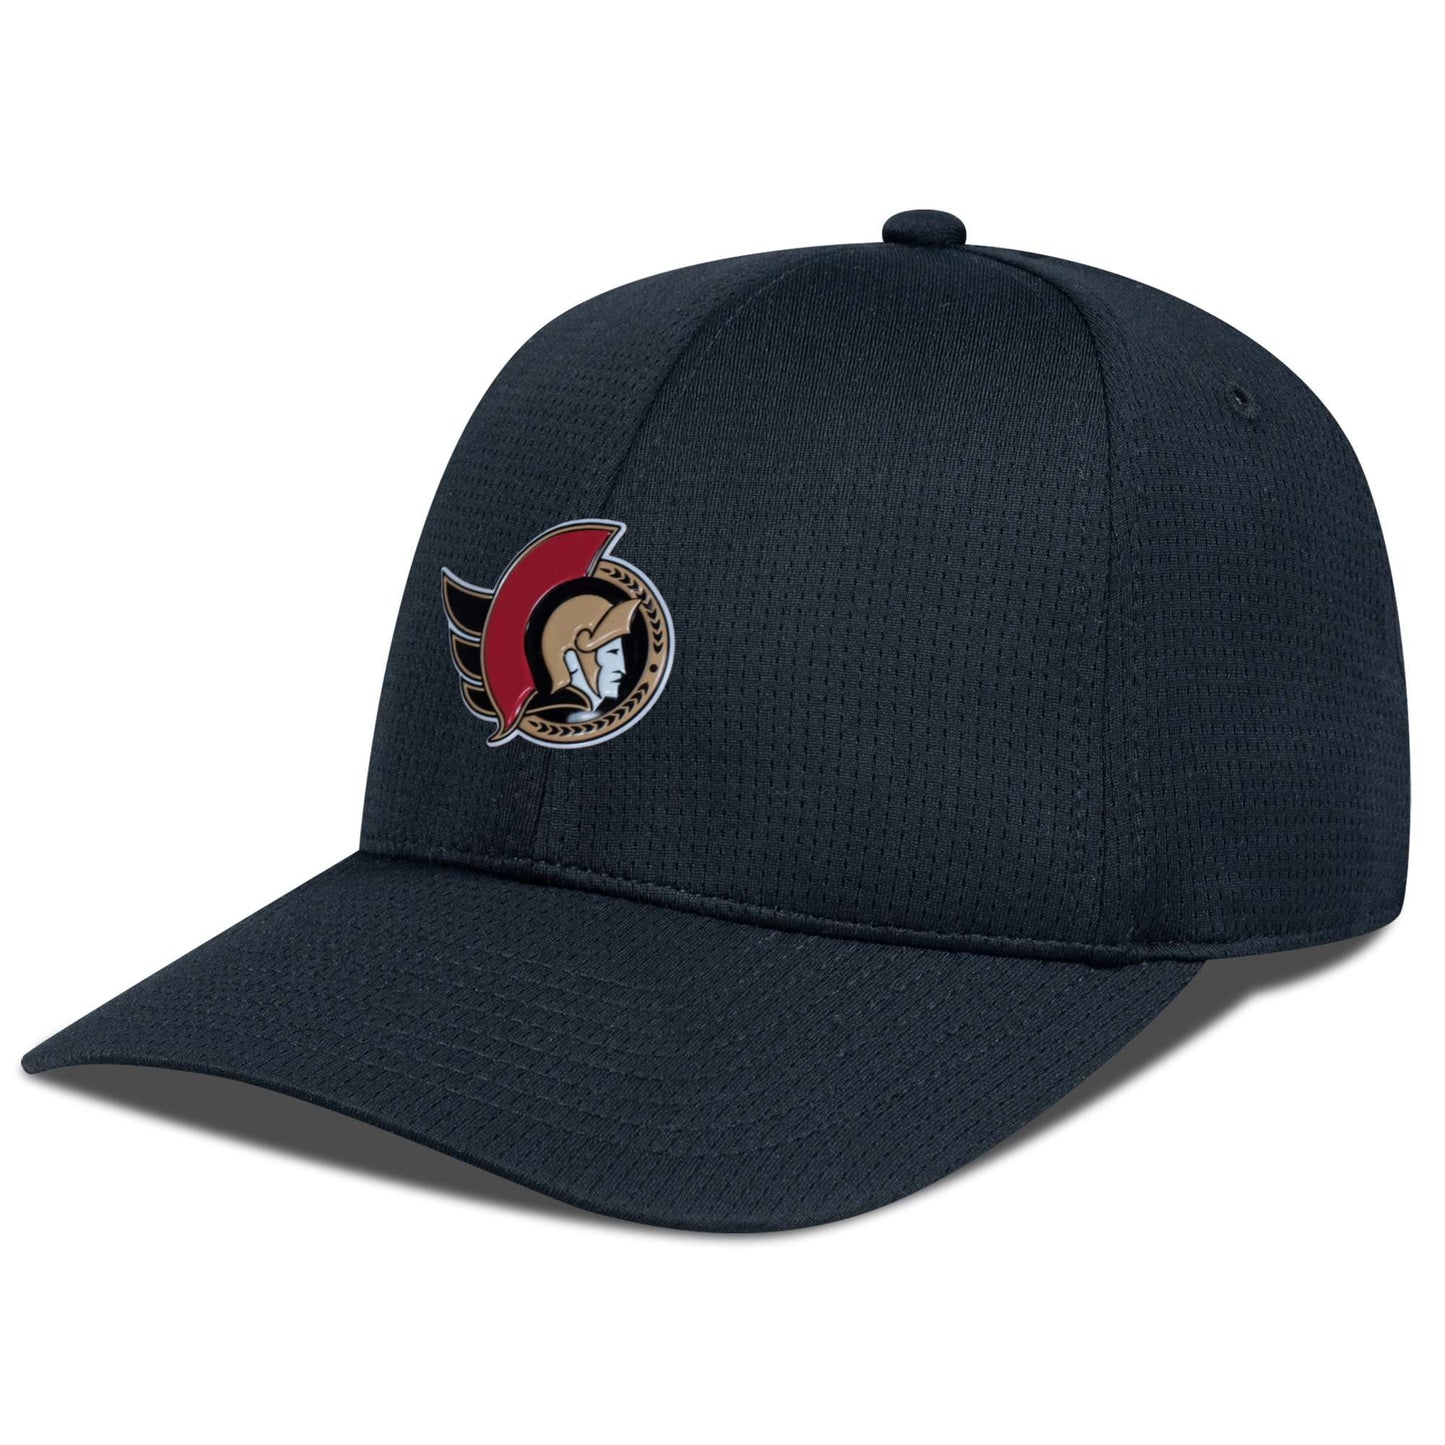 Men's Levelwear Black Ottawa Senators Zephyr Adjustable Hat - OSFA